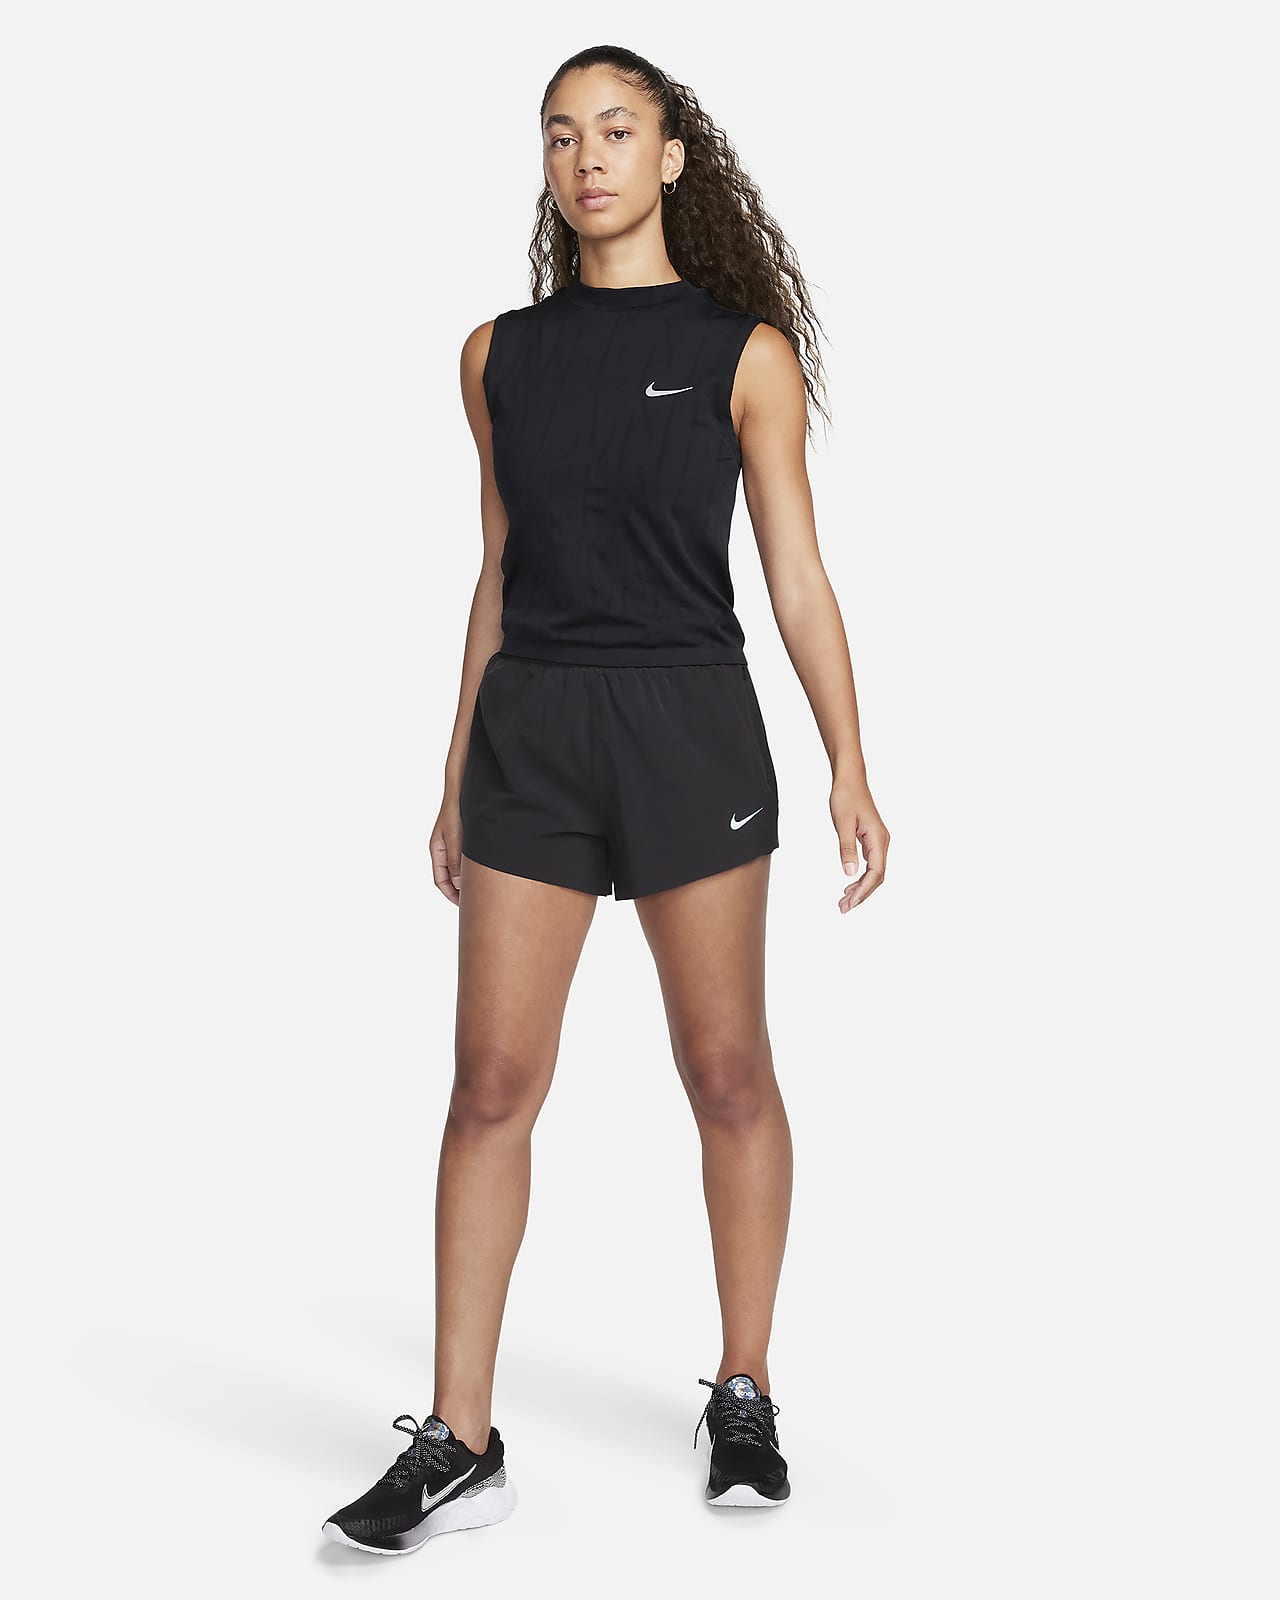 Nike Dri Fit Running Training Pants Black Pockets Athletic Women's Small